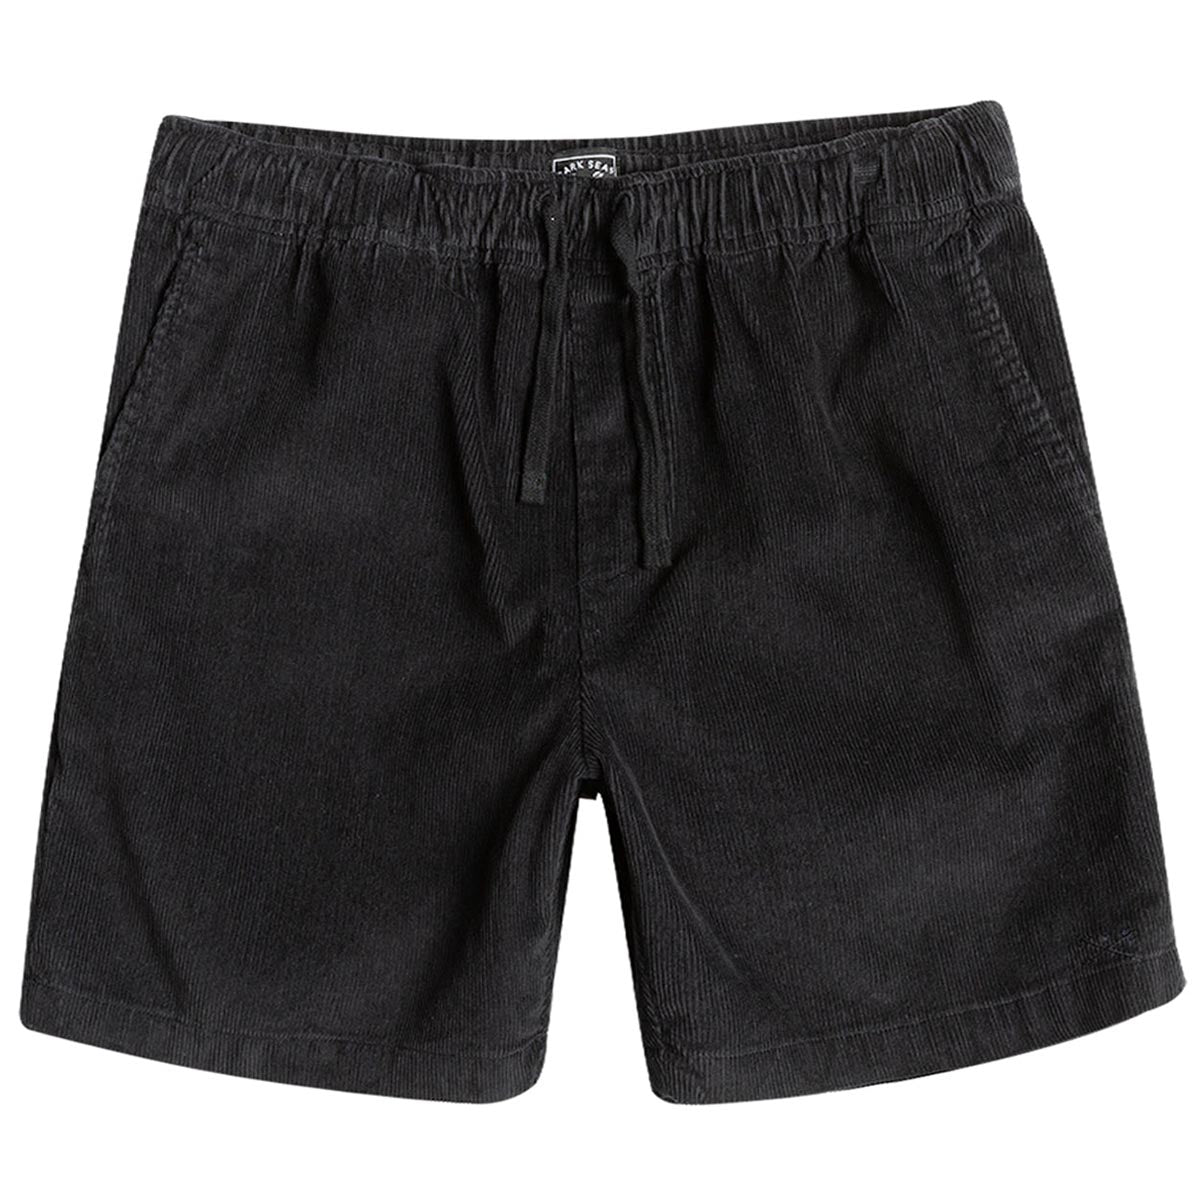 Dark Seas Go-to Cord Shorts - Black image 1